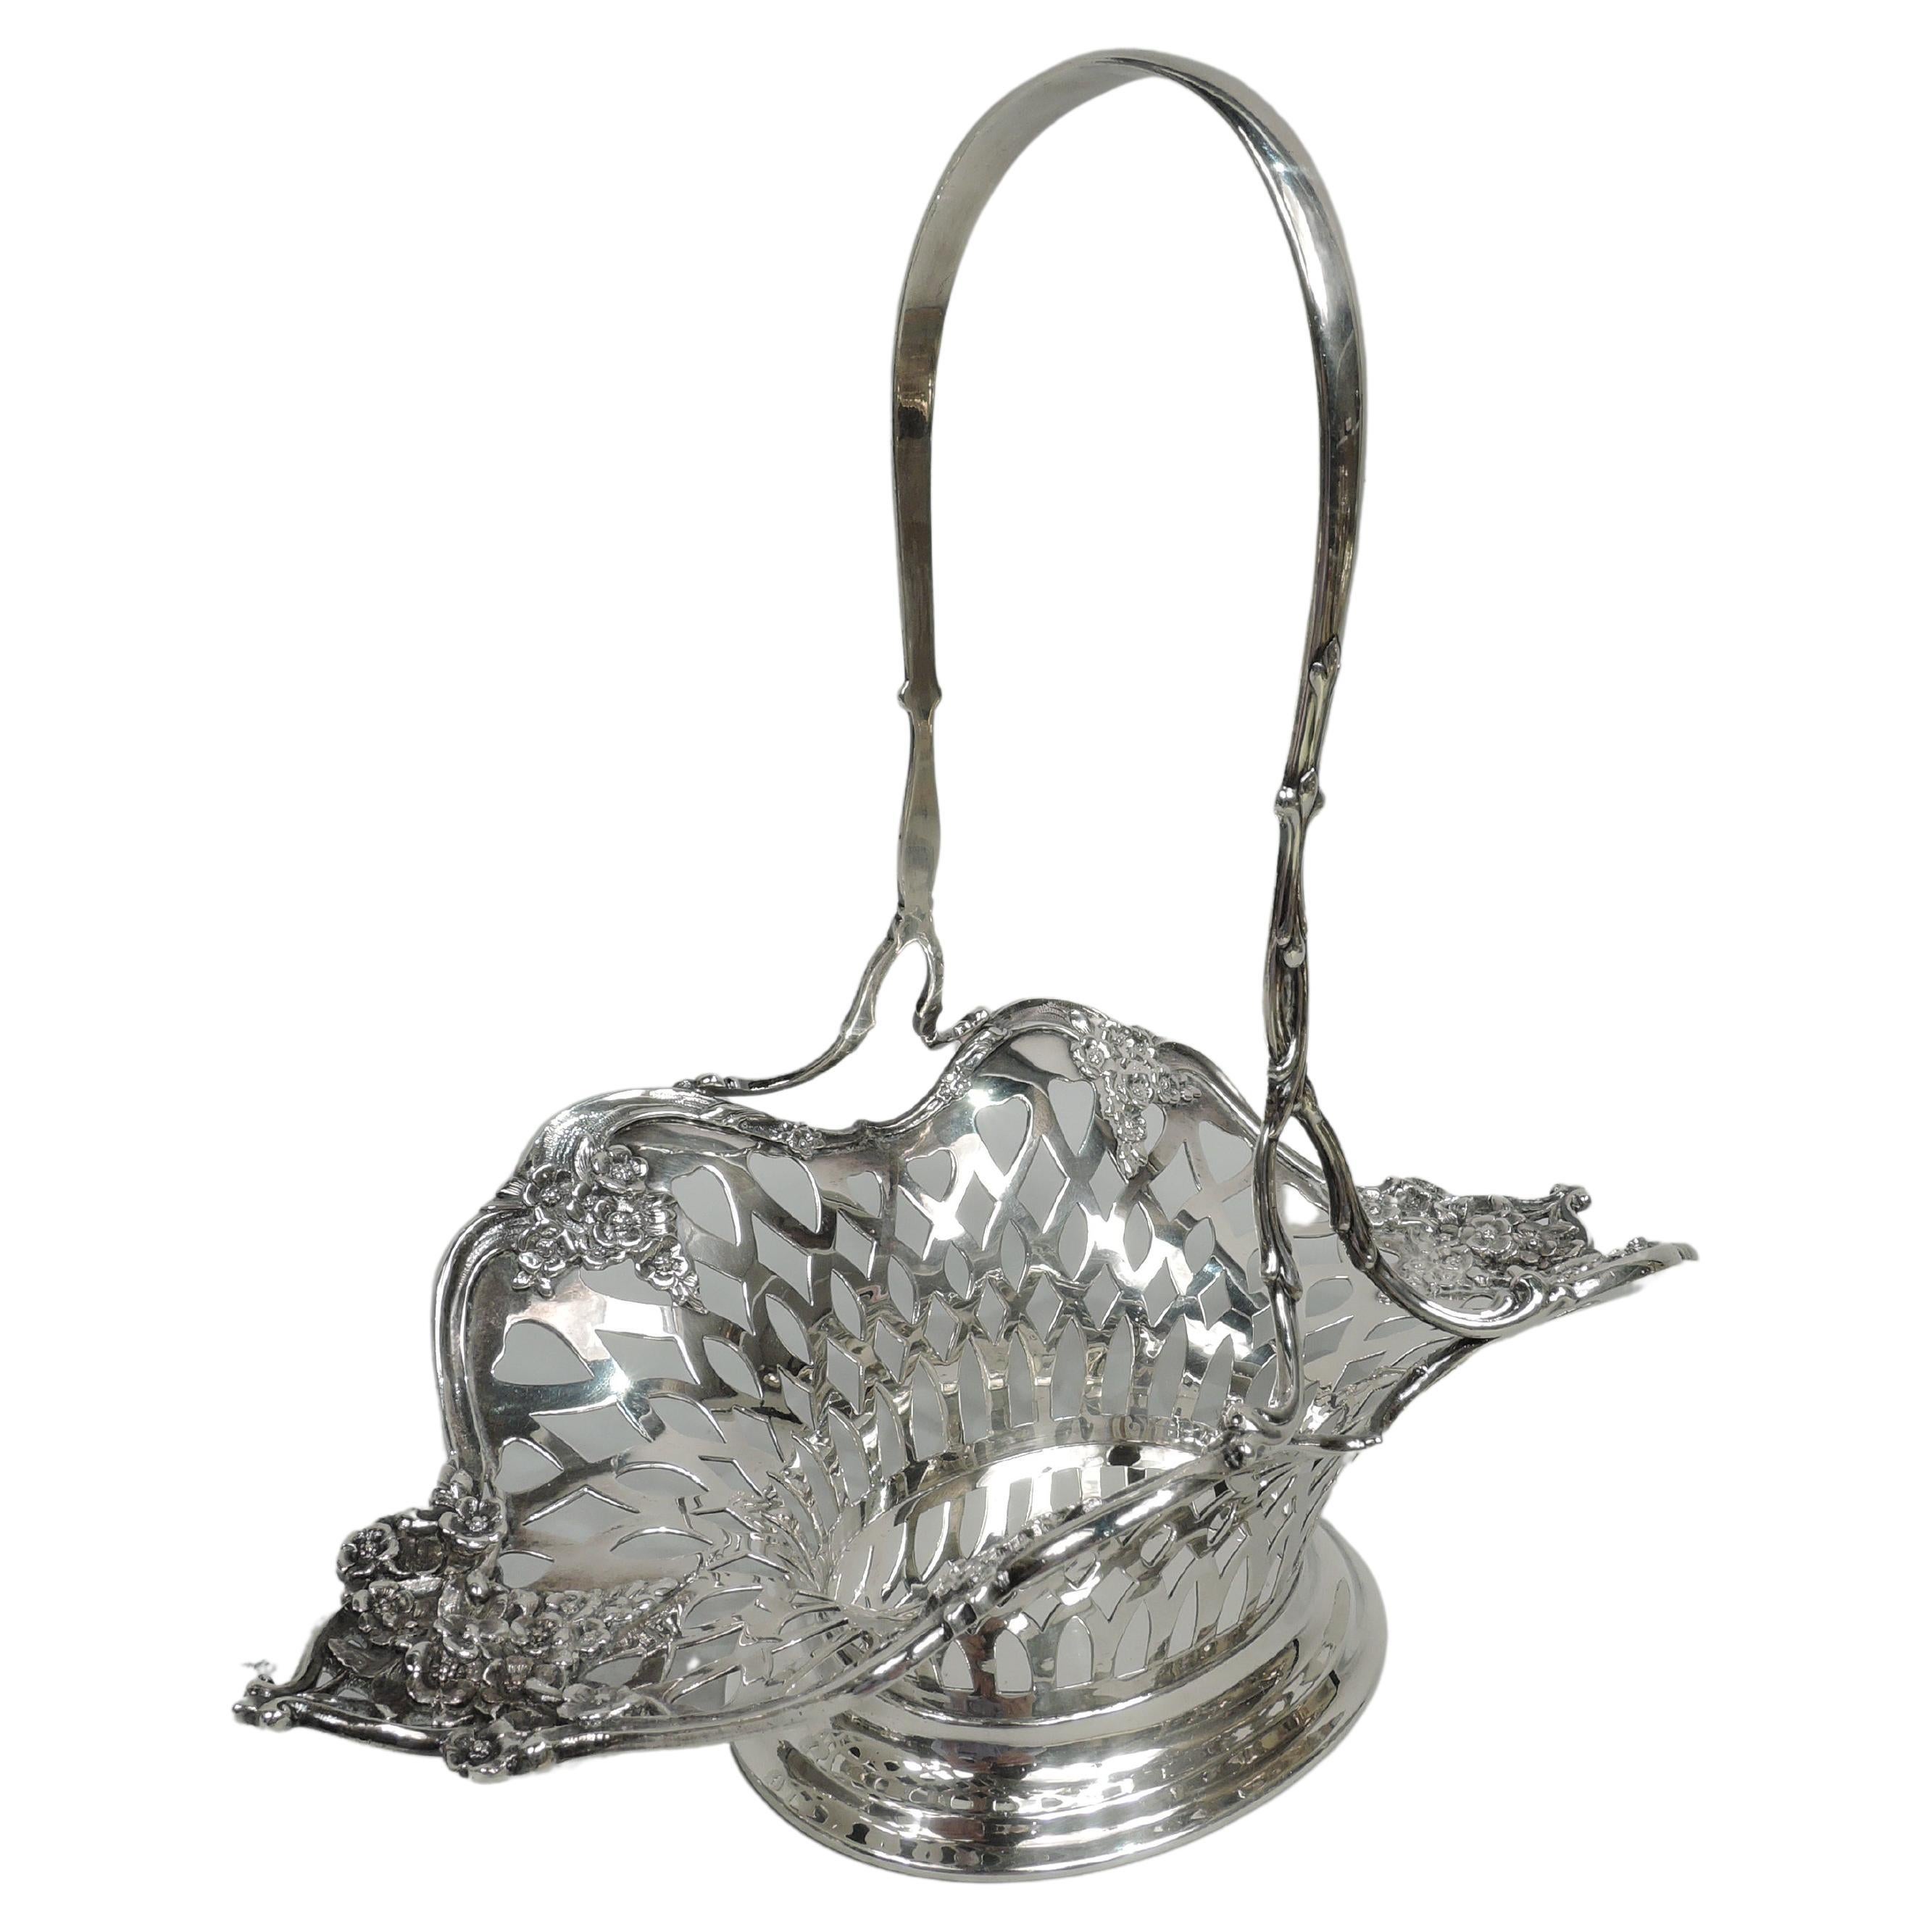 Bonita cesta antigua Tiffany American Edwardian de plata de ley